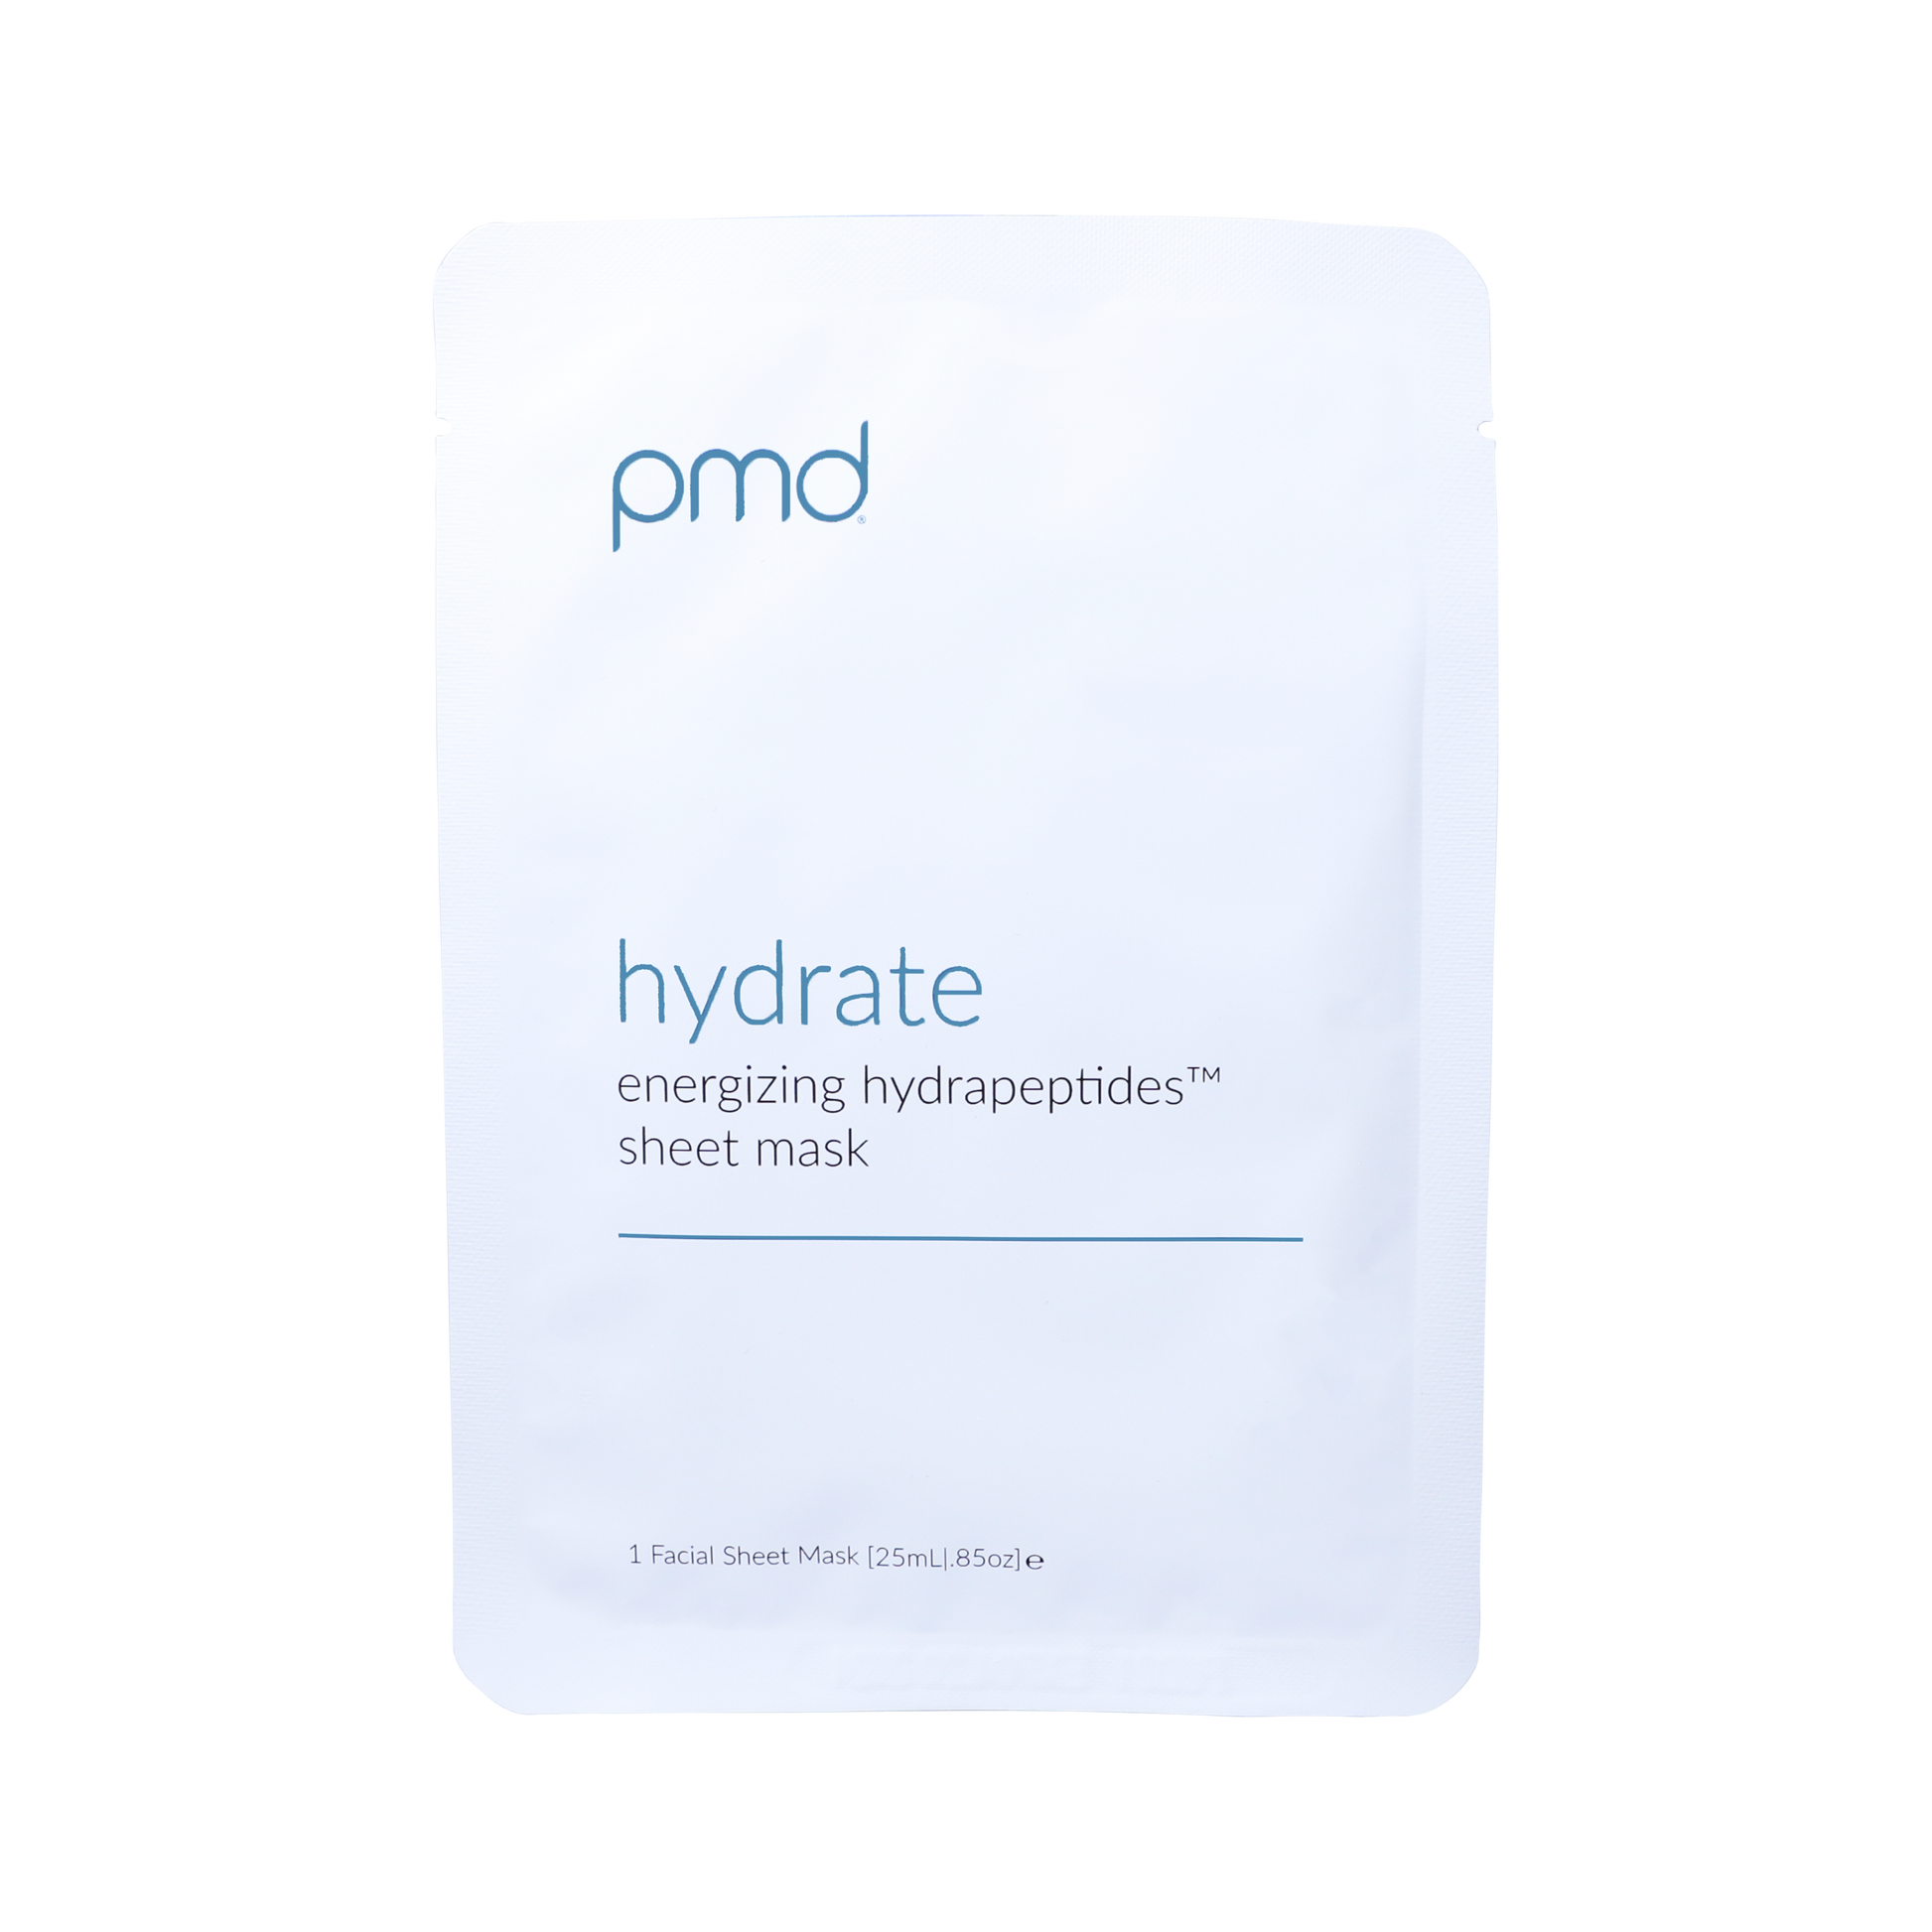 1050-Hydrate?Hydrate Energizing HydratingPeptides